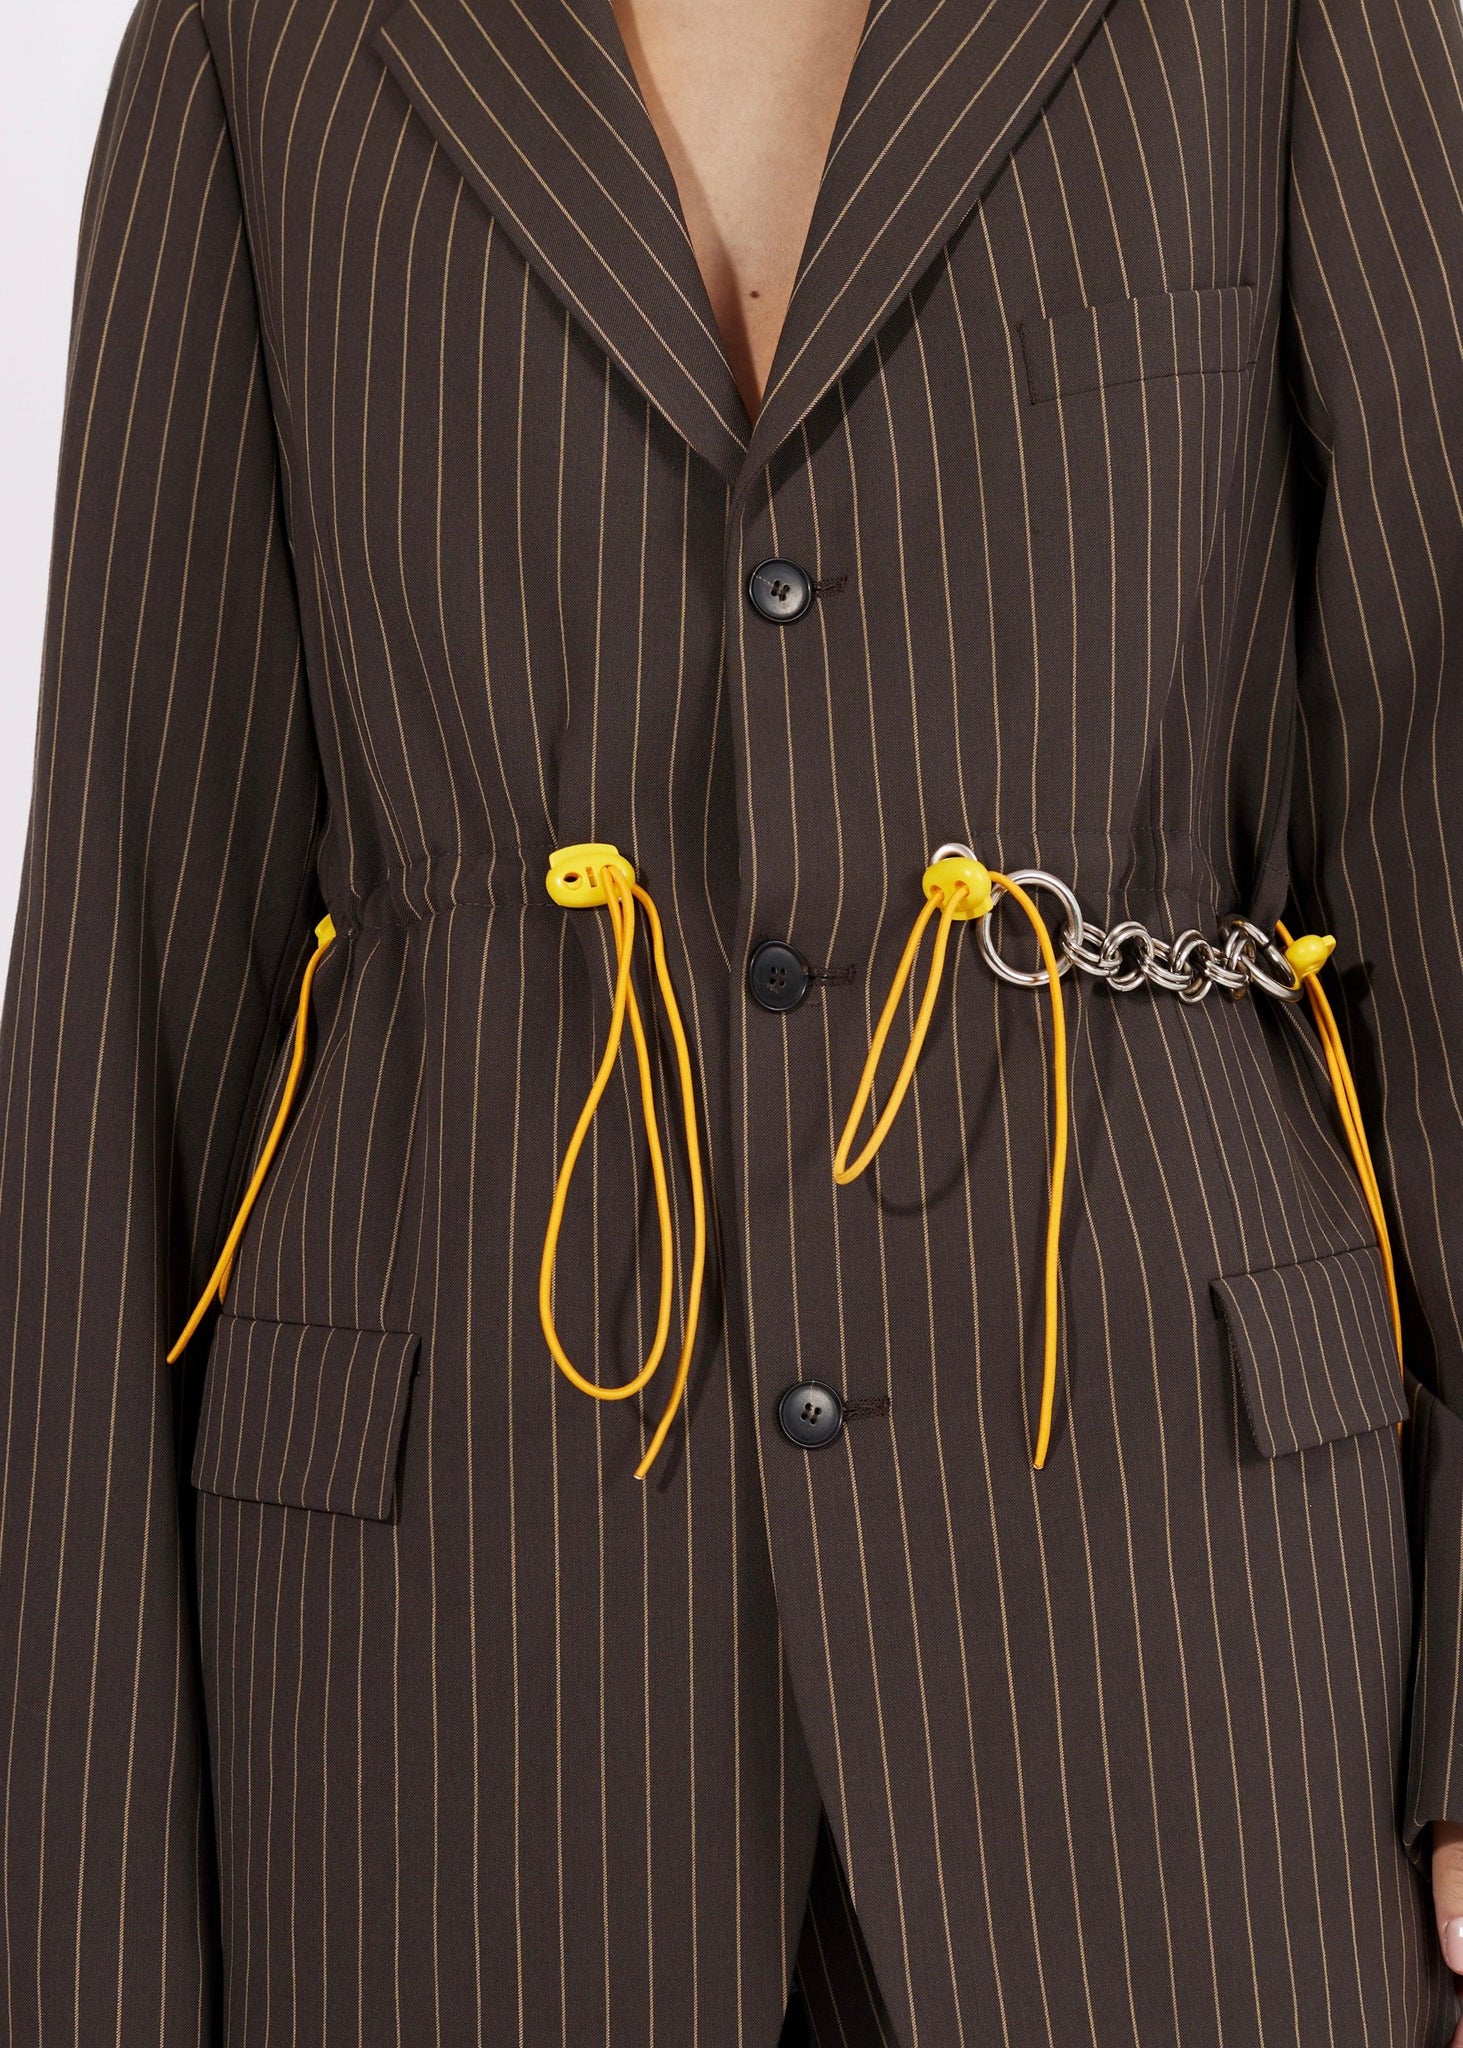 POSTUSHNA upcycled striped suit - SONI LONDON